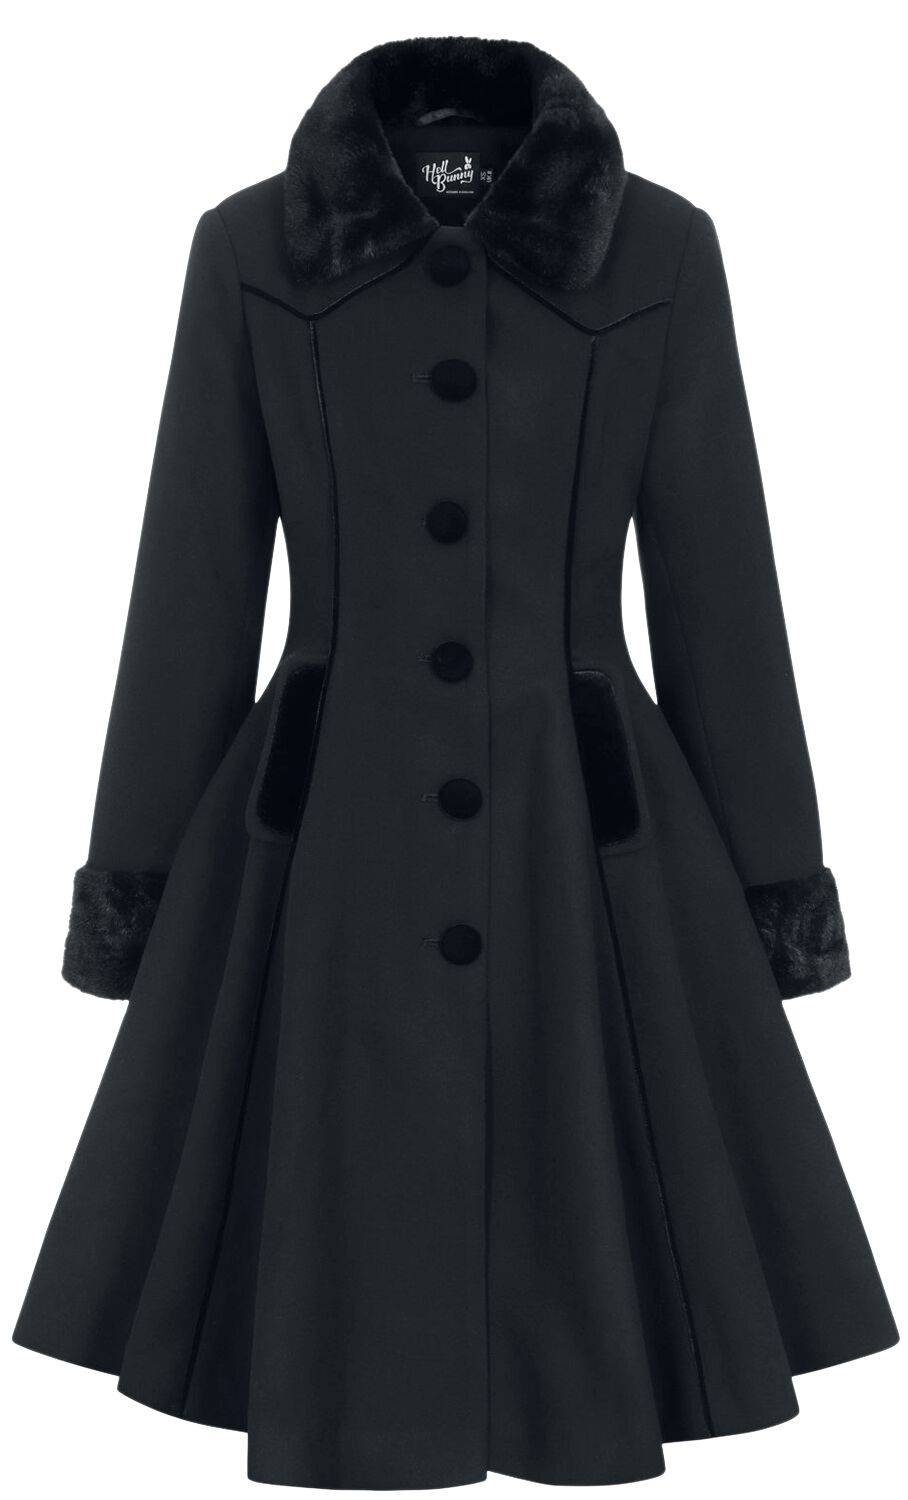 Hell Bunny Olwin Coat Coats black